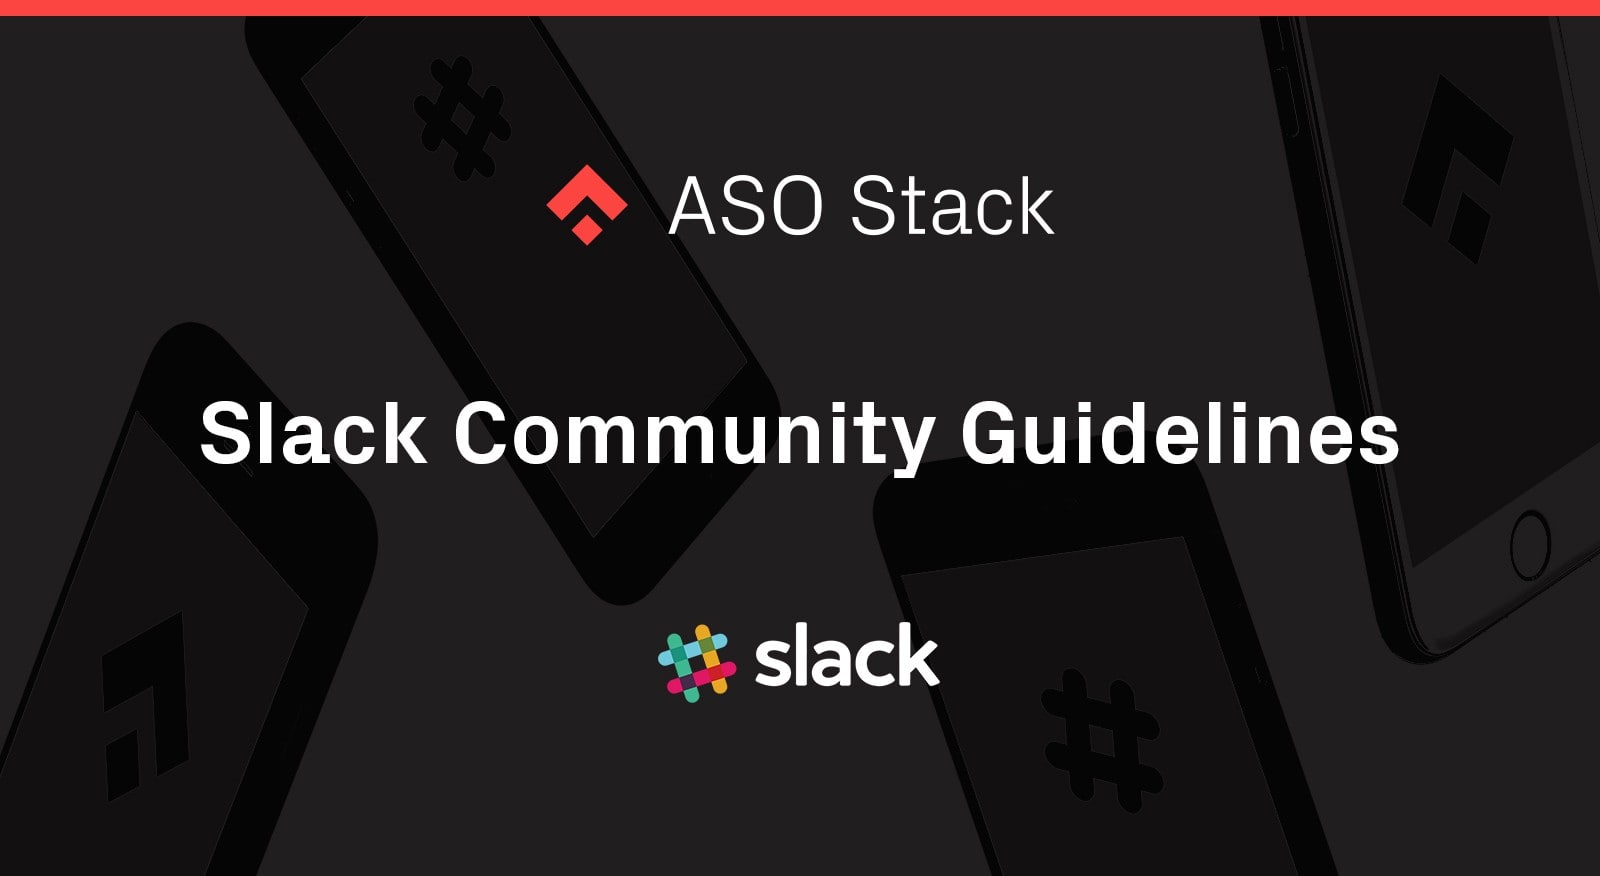 ASOStack — Slack Community Guidelines